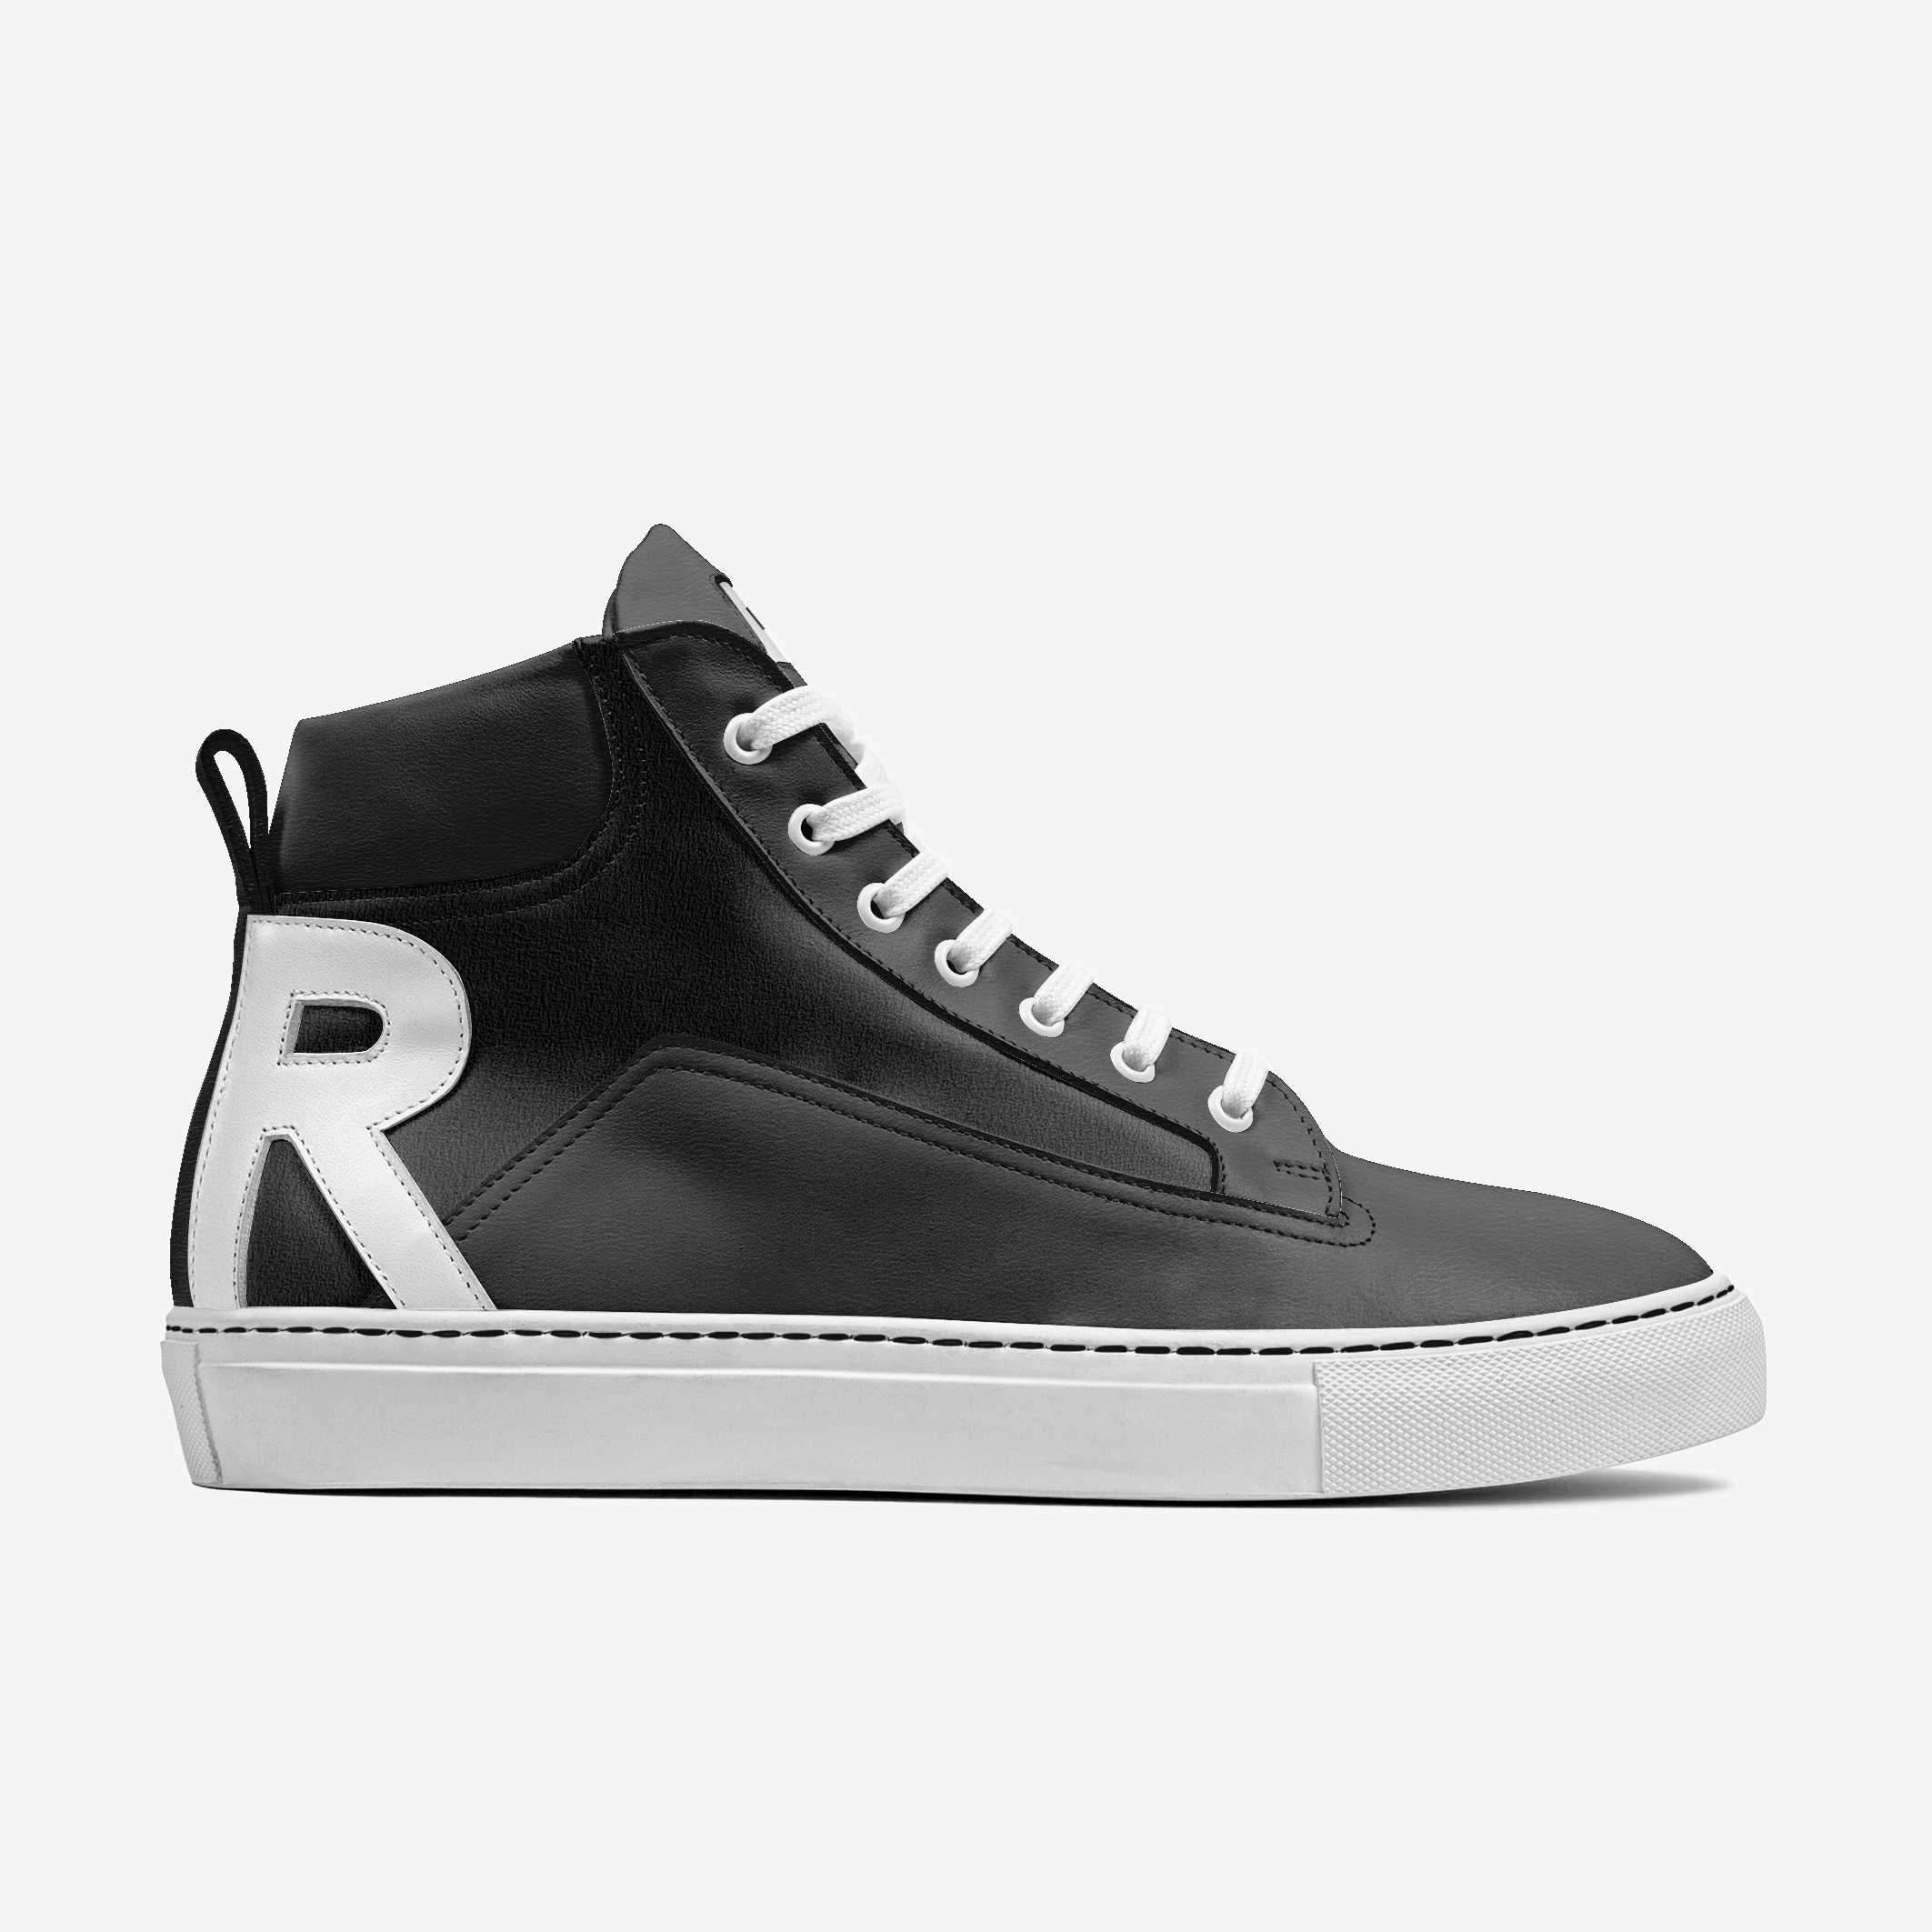 O.G. RIDDICK [UNISEX] - Riddick Shoes Shoe Riddick Shoes   